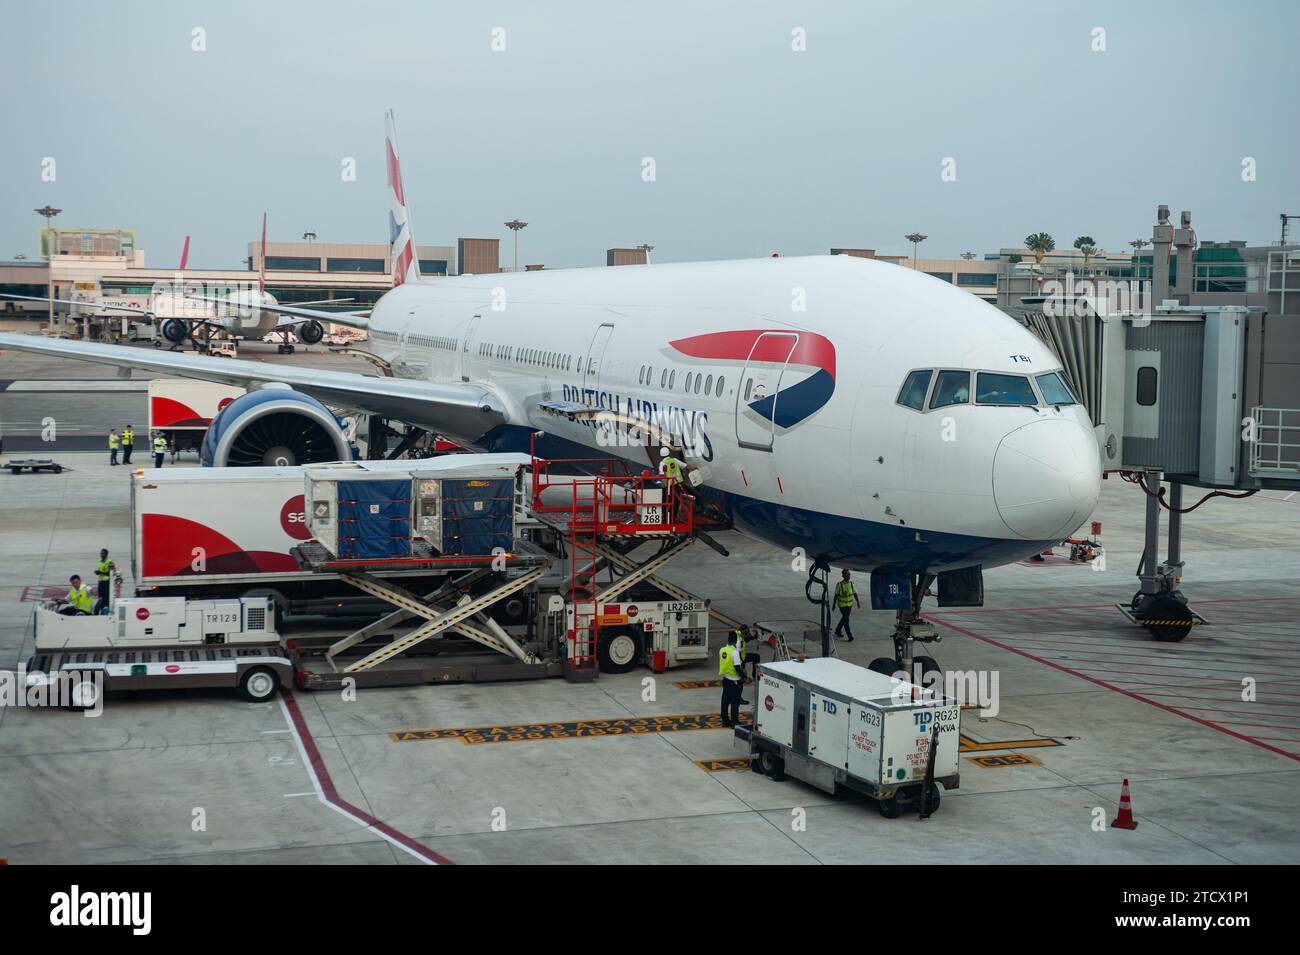 14.09.2018, Singapore, Republic of Singapore, Asia - British Airways Boeing 777-300 ER passenger aircraft is docked at Changi Airport. Stock Photo